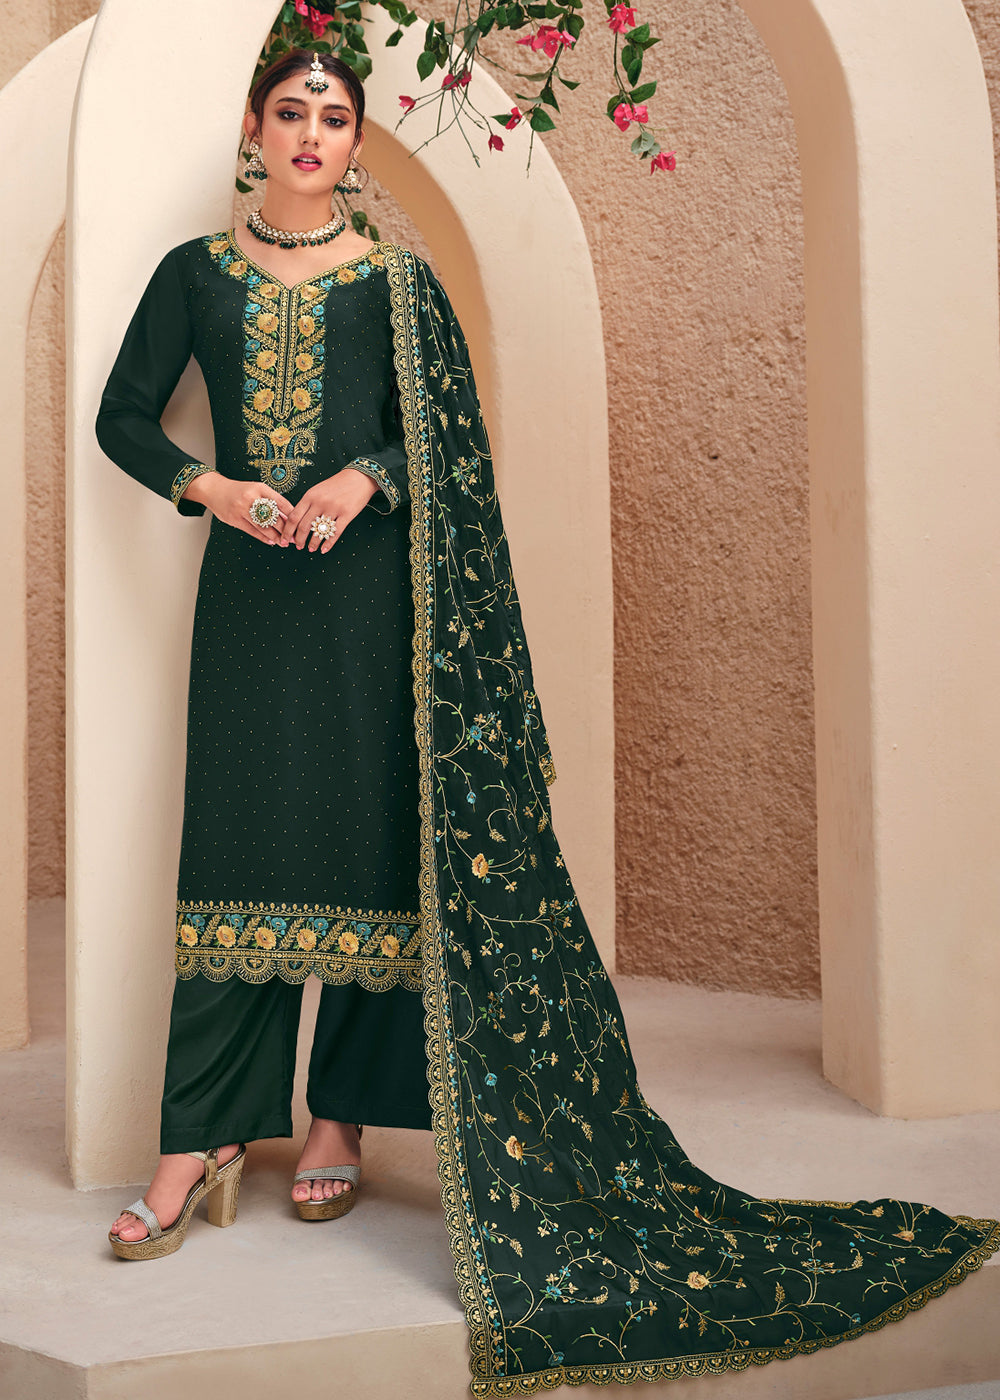 Buy Now Green Swarovski Work & Embroidered Eid Wear Salwar Suit Online in USA, UK, Canada, Germany, Australia & Worldwide at Empress Clothing.